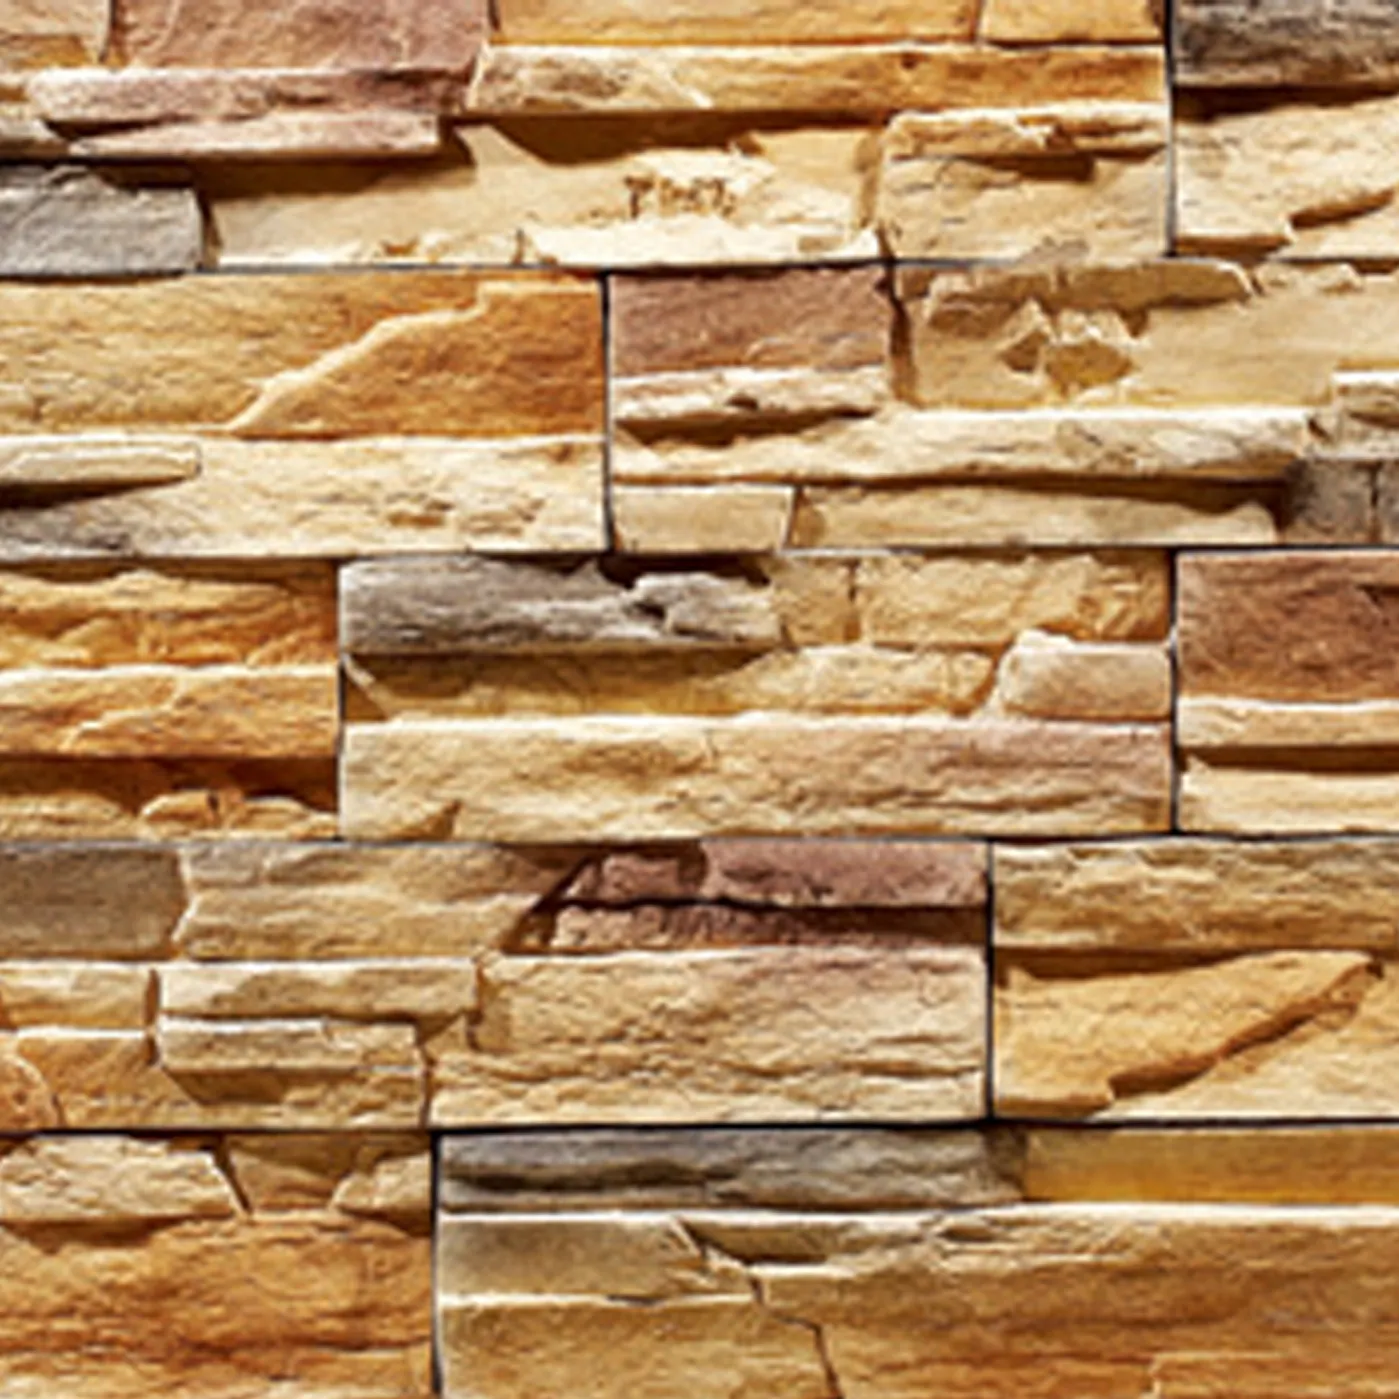 artificial false stone face wall stone exterior walls panel tiles for interior and exterior wall cladding